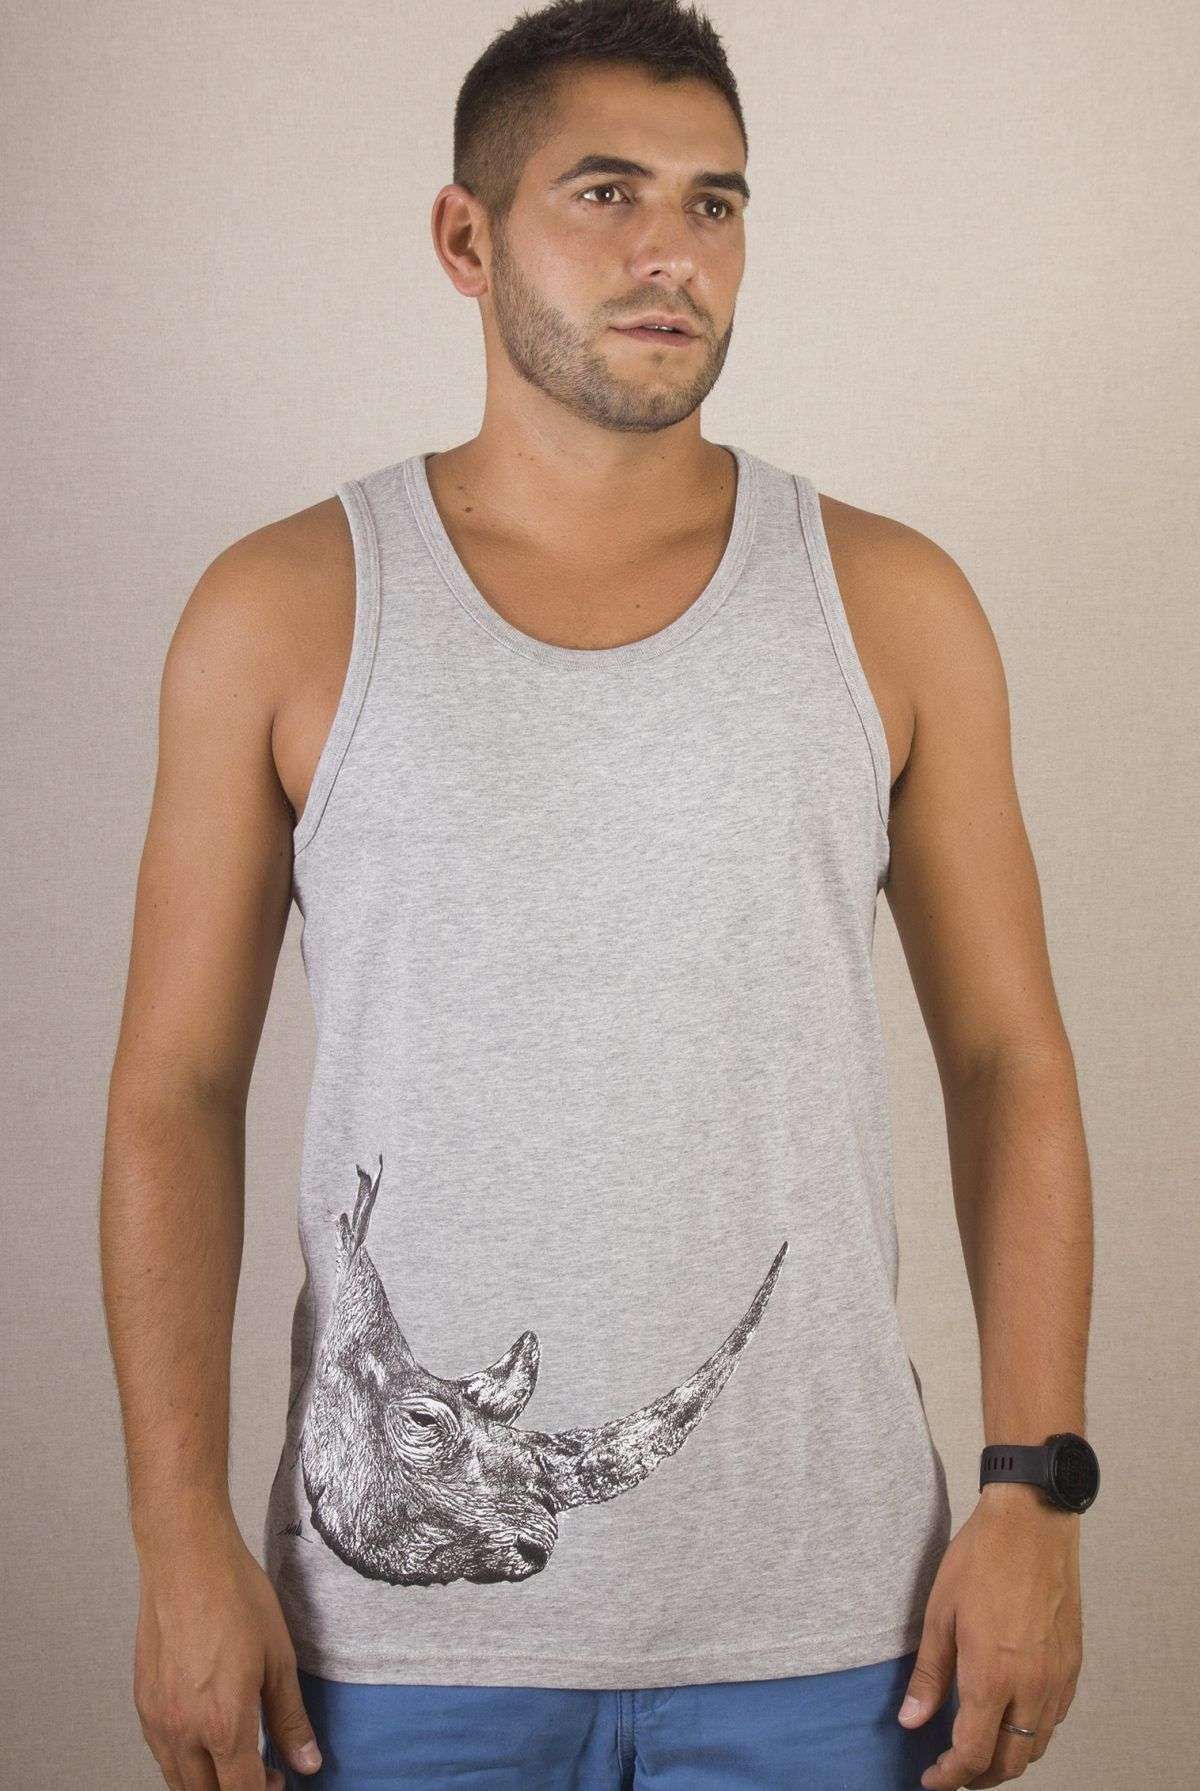 Camiseta hombre Rinoceronte de tirantes-sirem wild